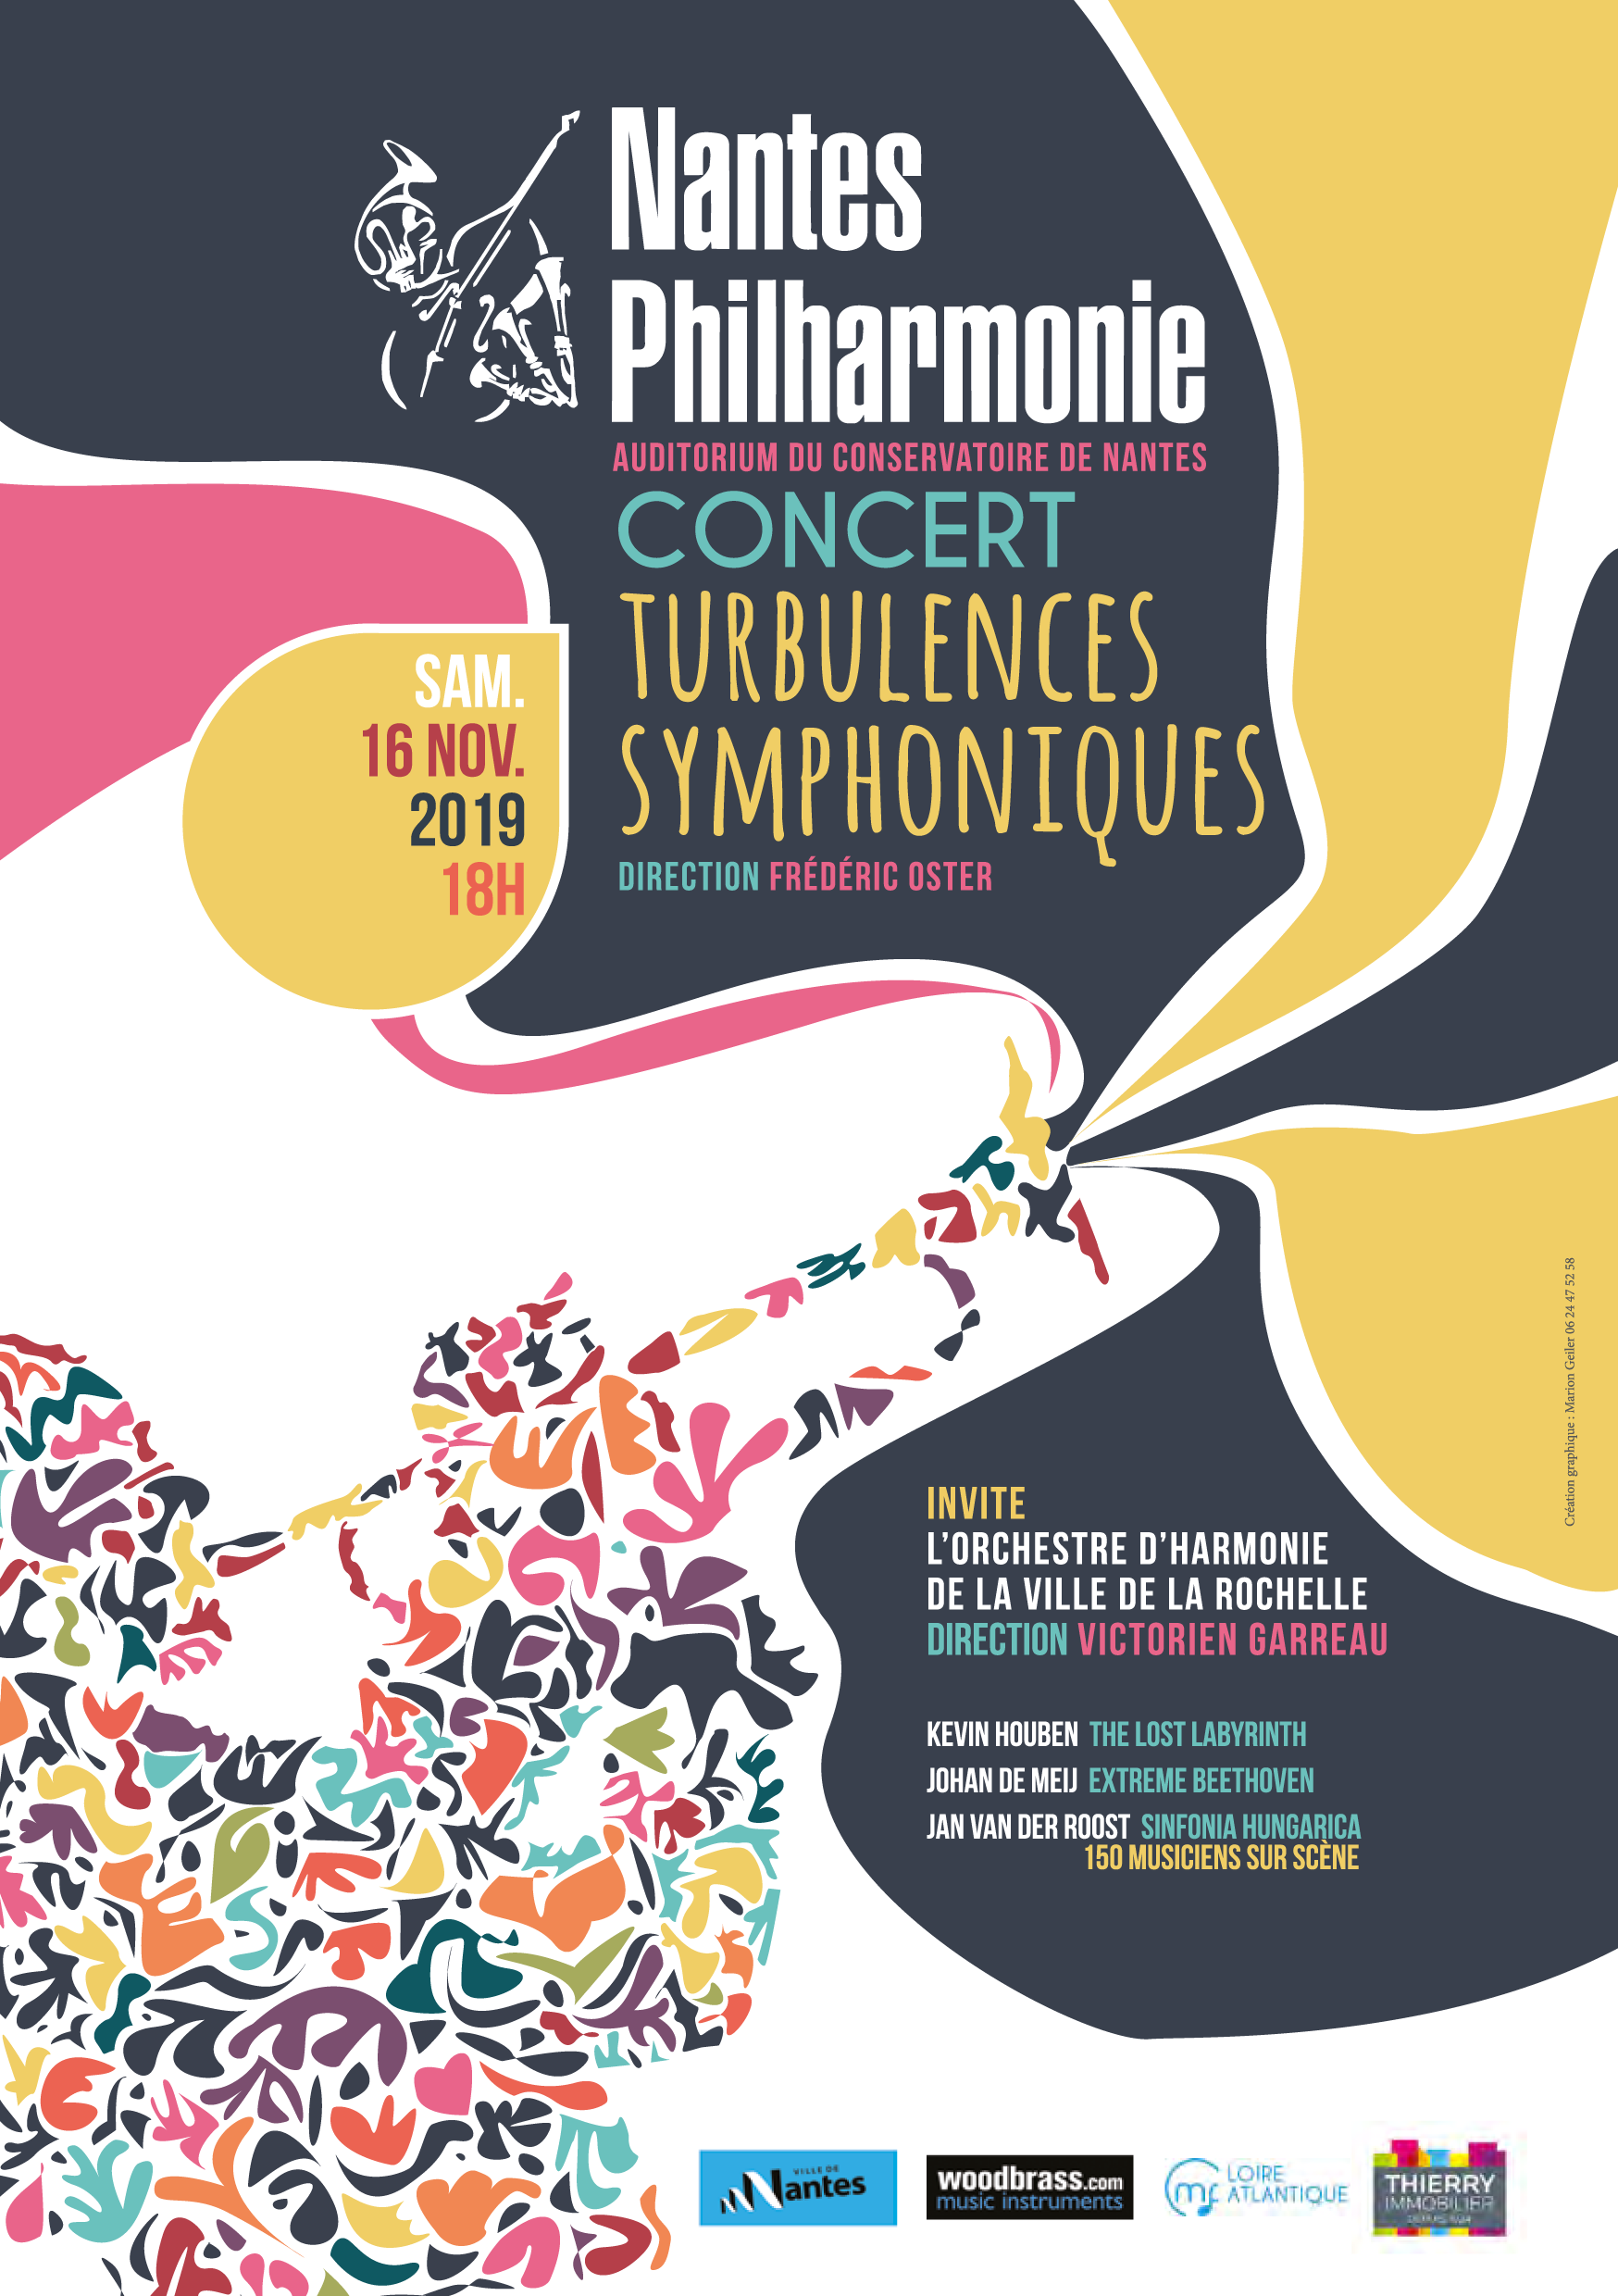 Turbulences symphoniques